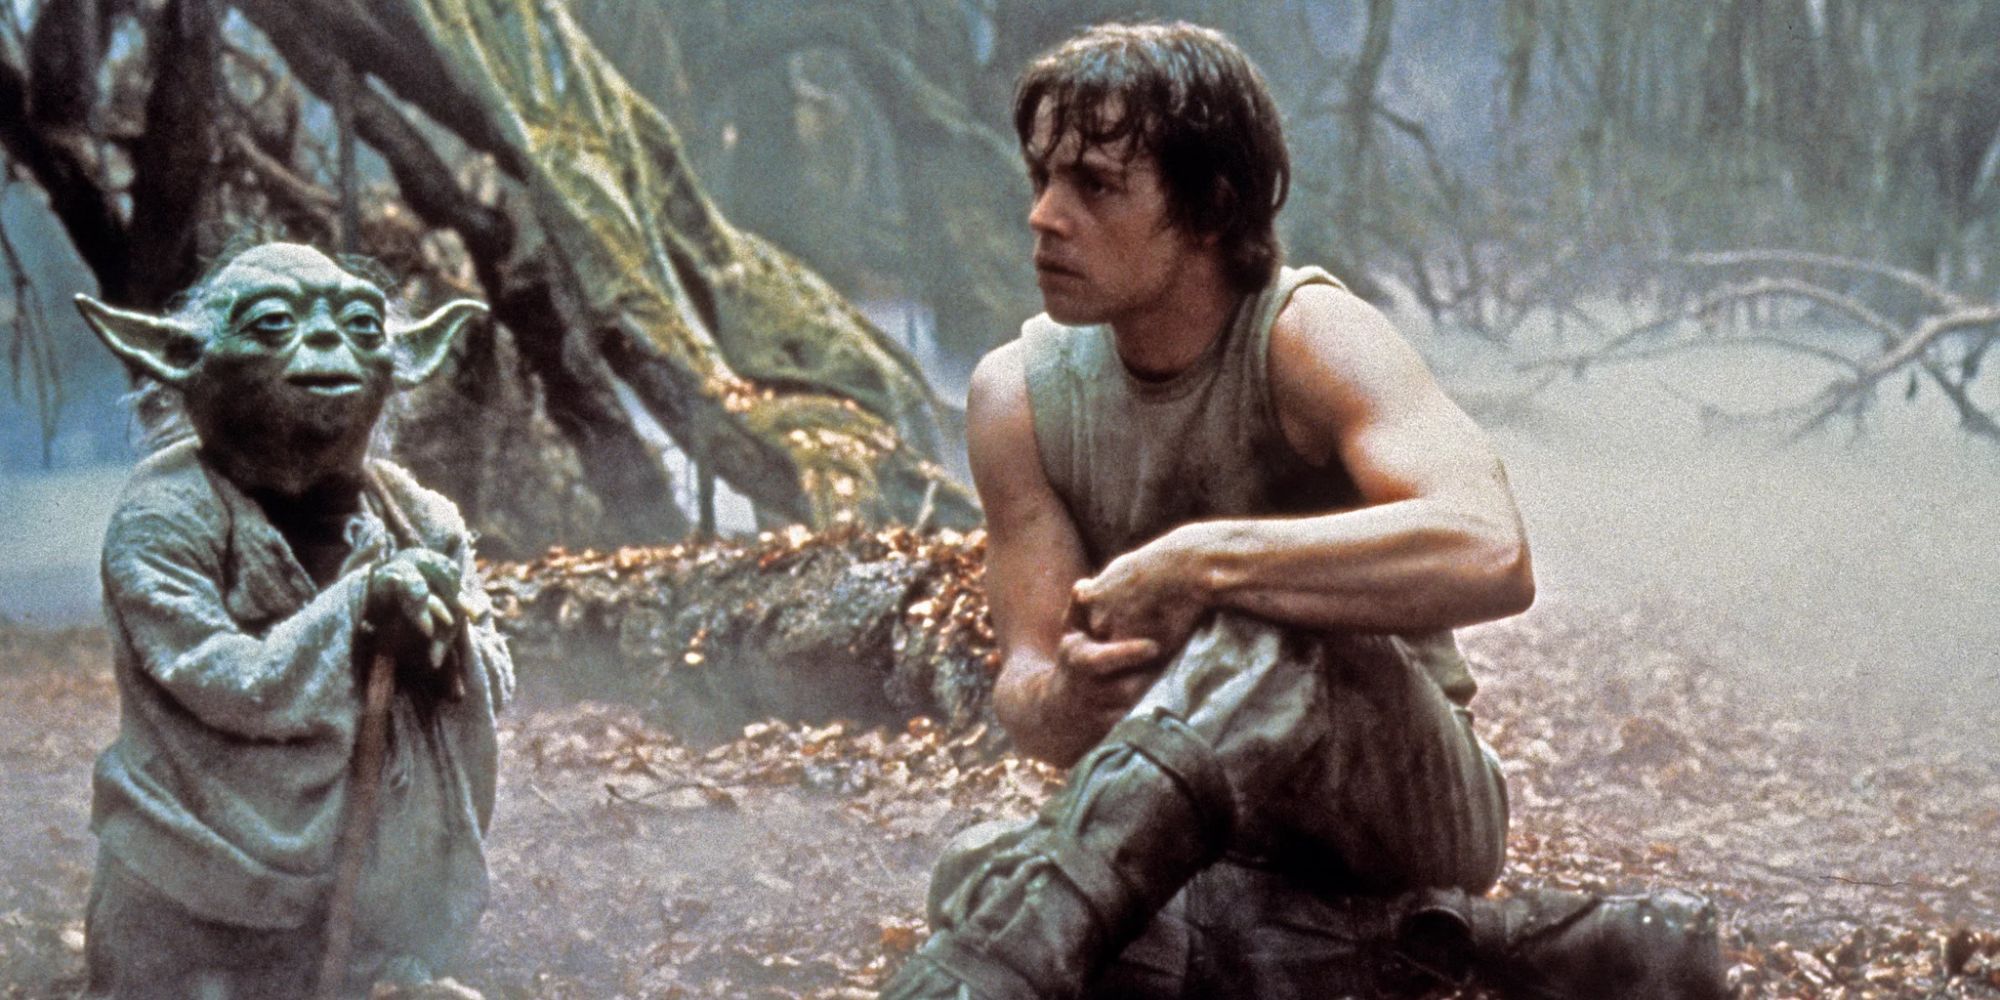 Mark Hamill as Luke in The Empire Strikes Back